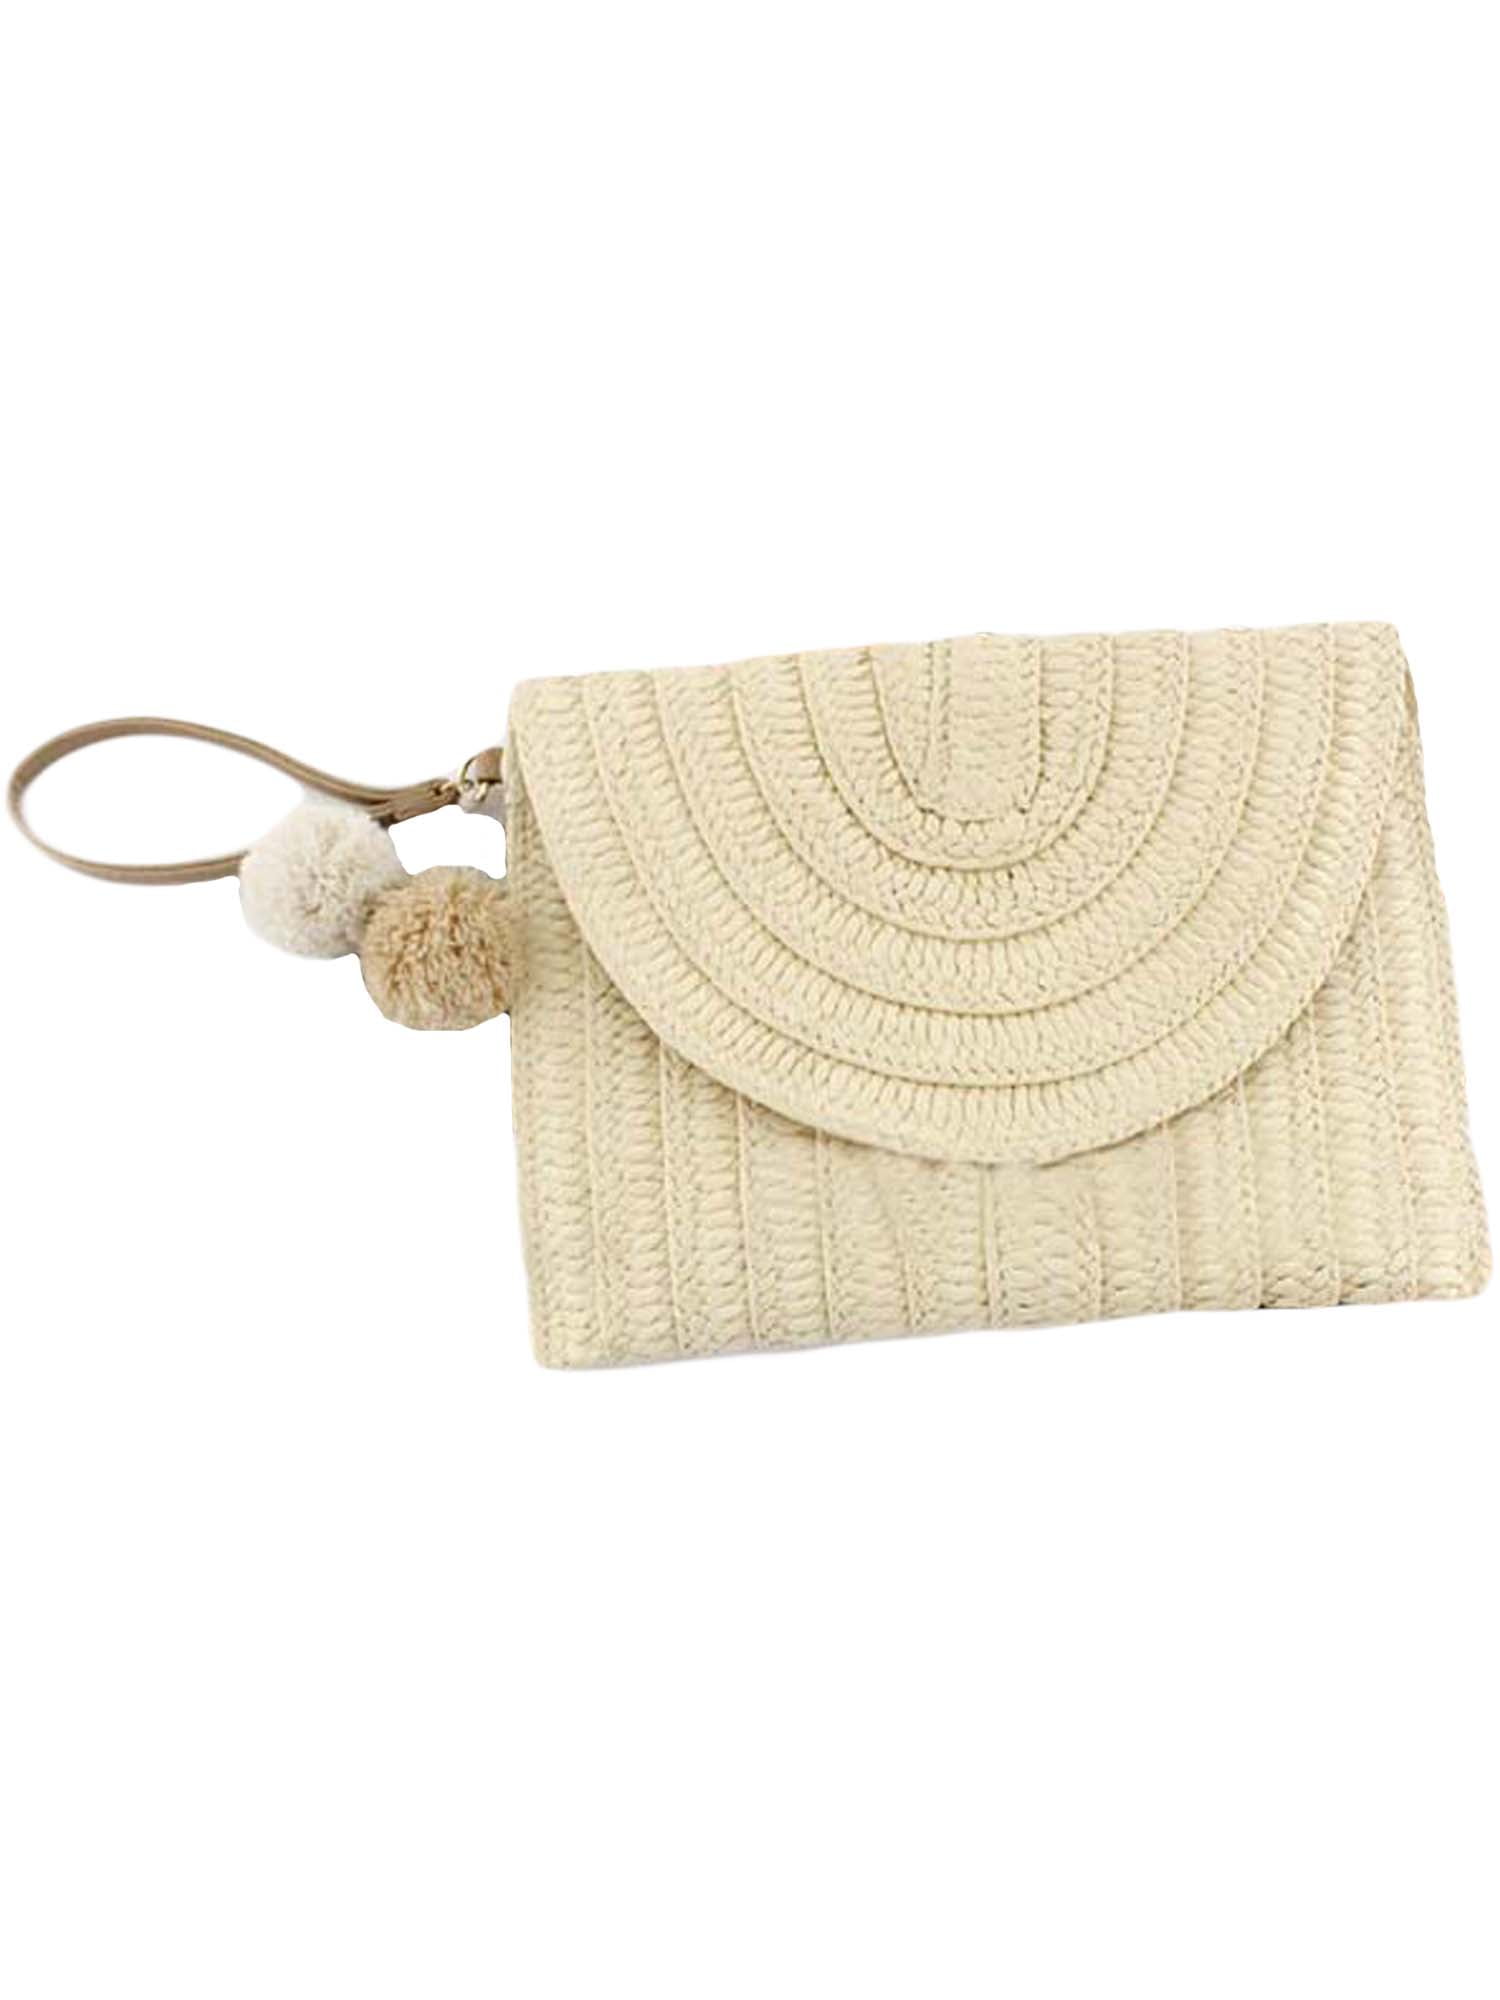 FENICAL Rattan Handwoven Round Crossbody Bag Small Purse Handbag Messenger Bag For Women And Girls 